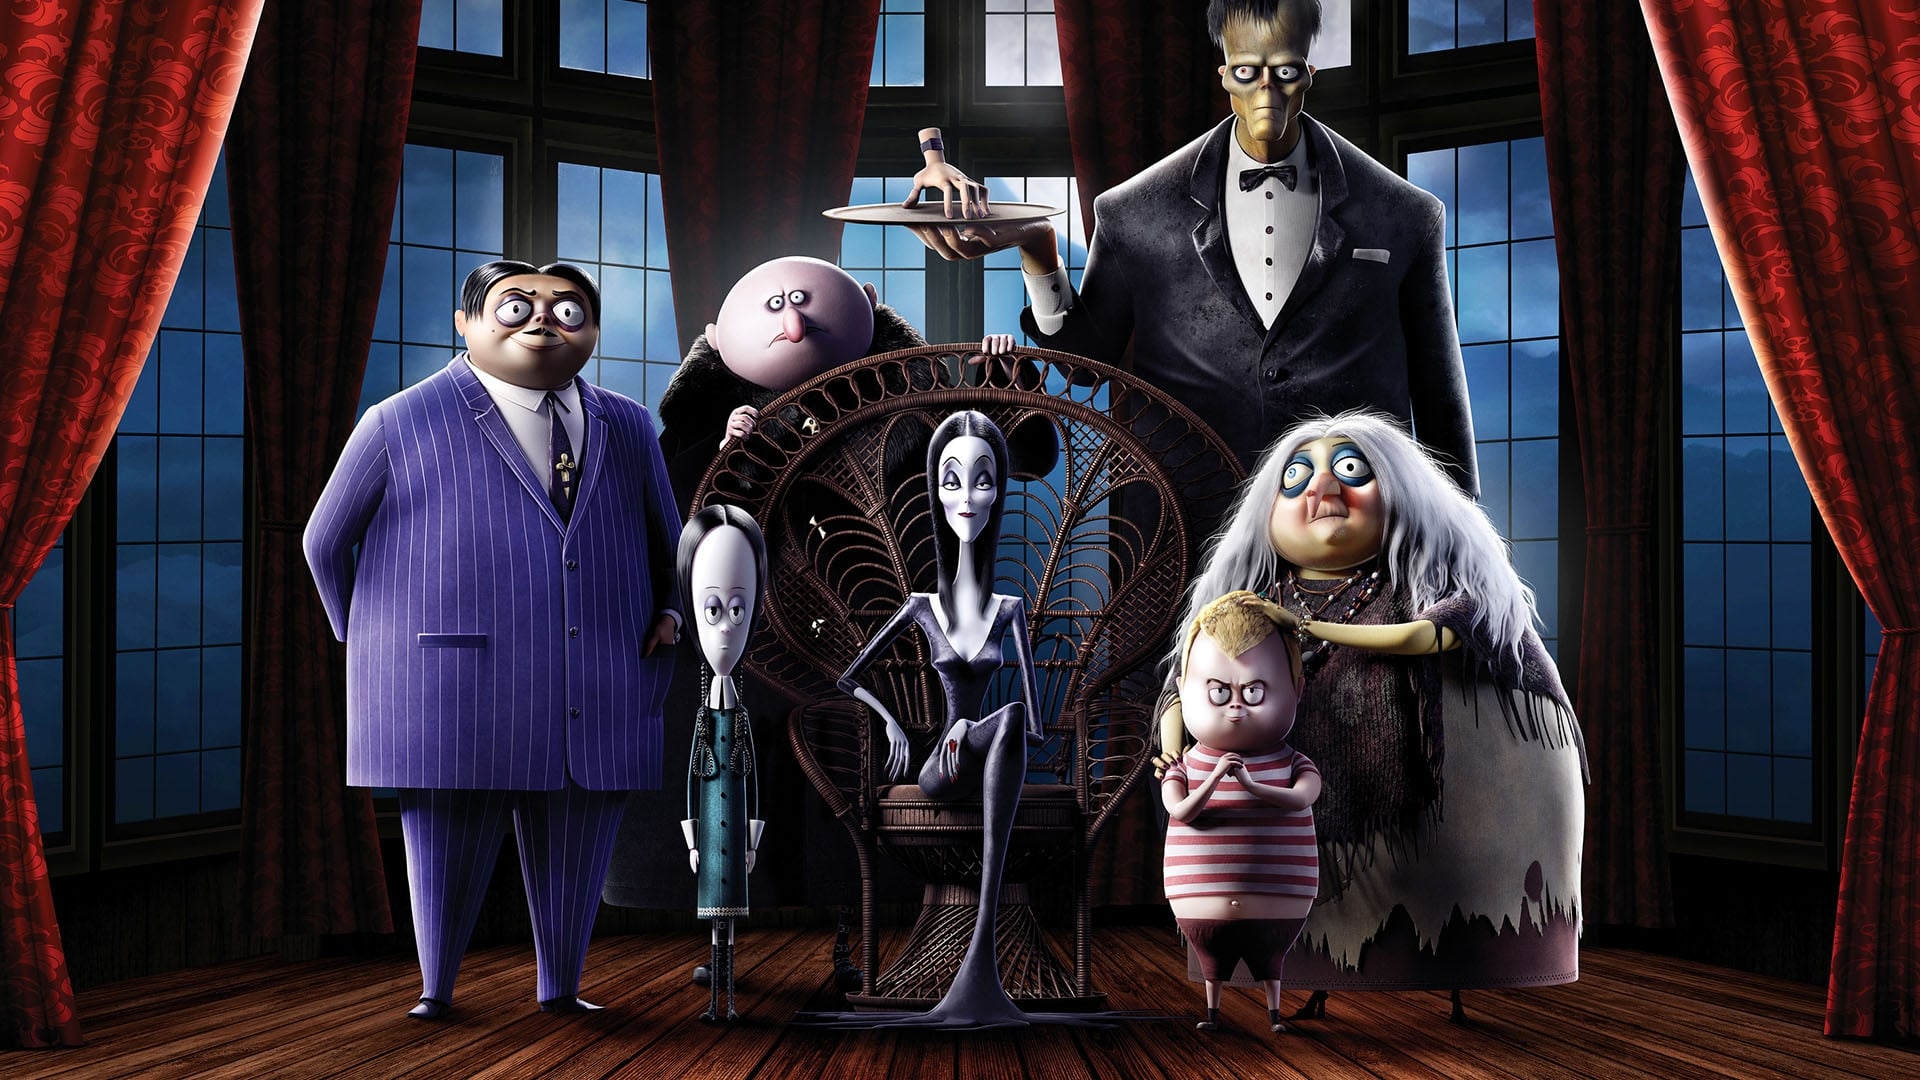 Image du film La Famille Addams as1pkh6t0xwidlj0pe4fsqufgqzjpg